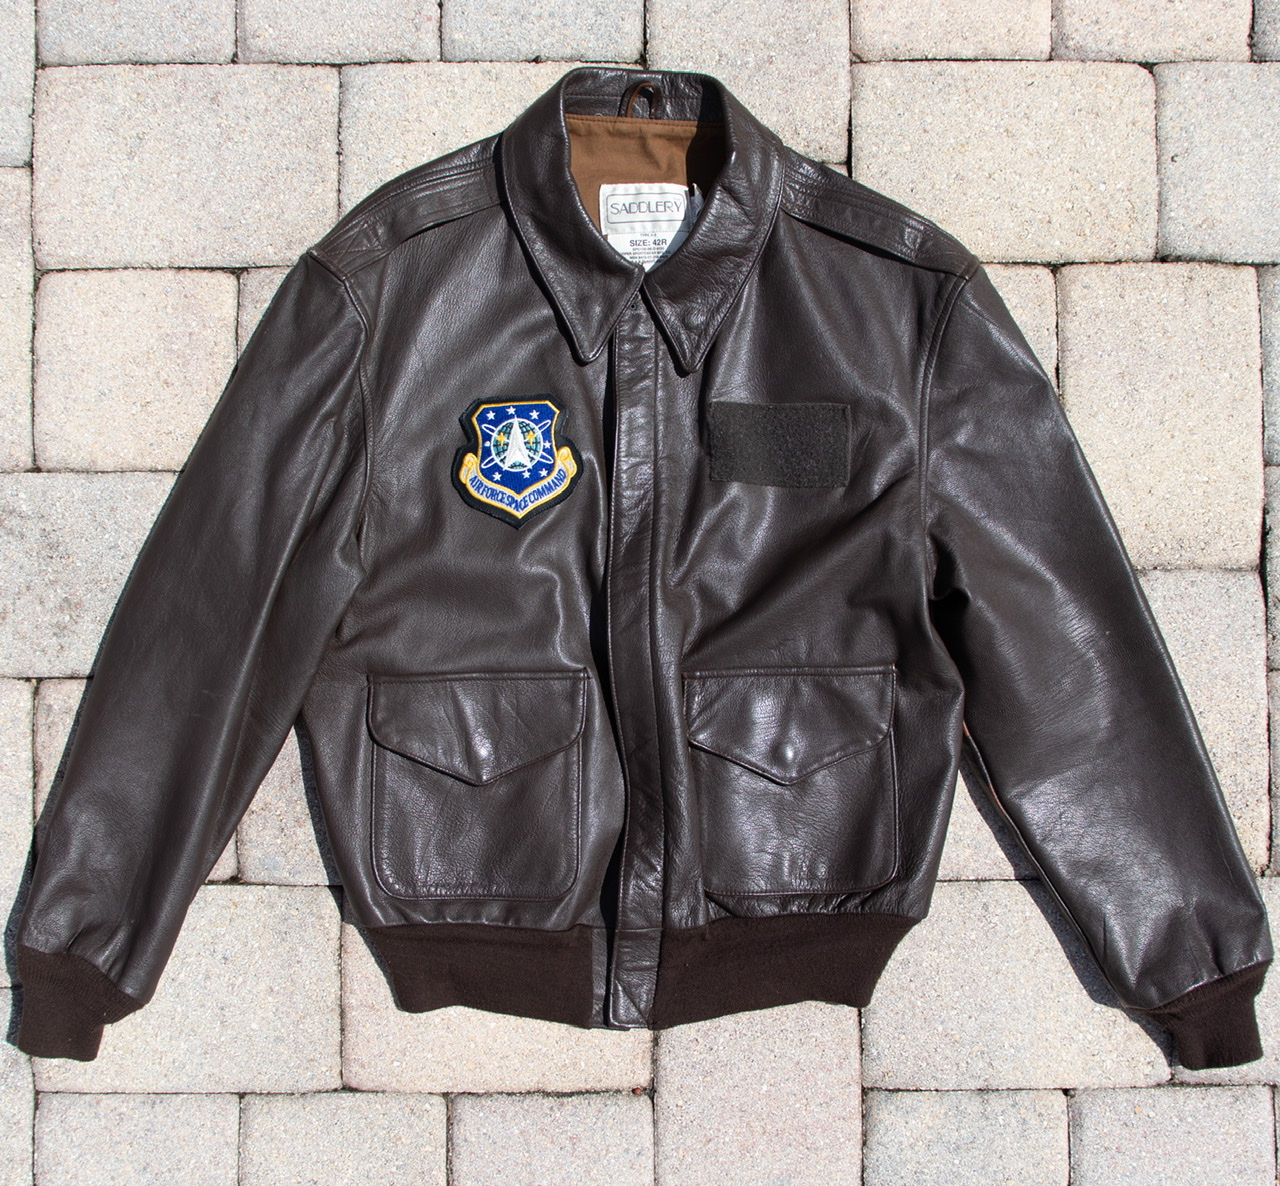 Cooper A-2 value | Vintage Leather Jackets Forum